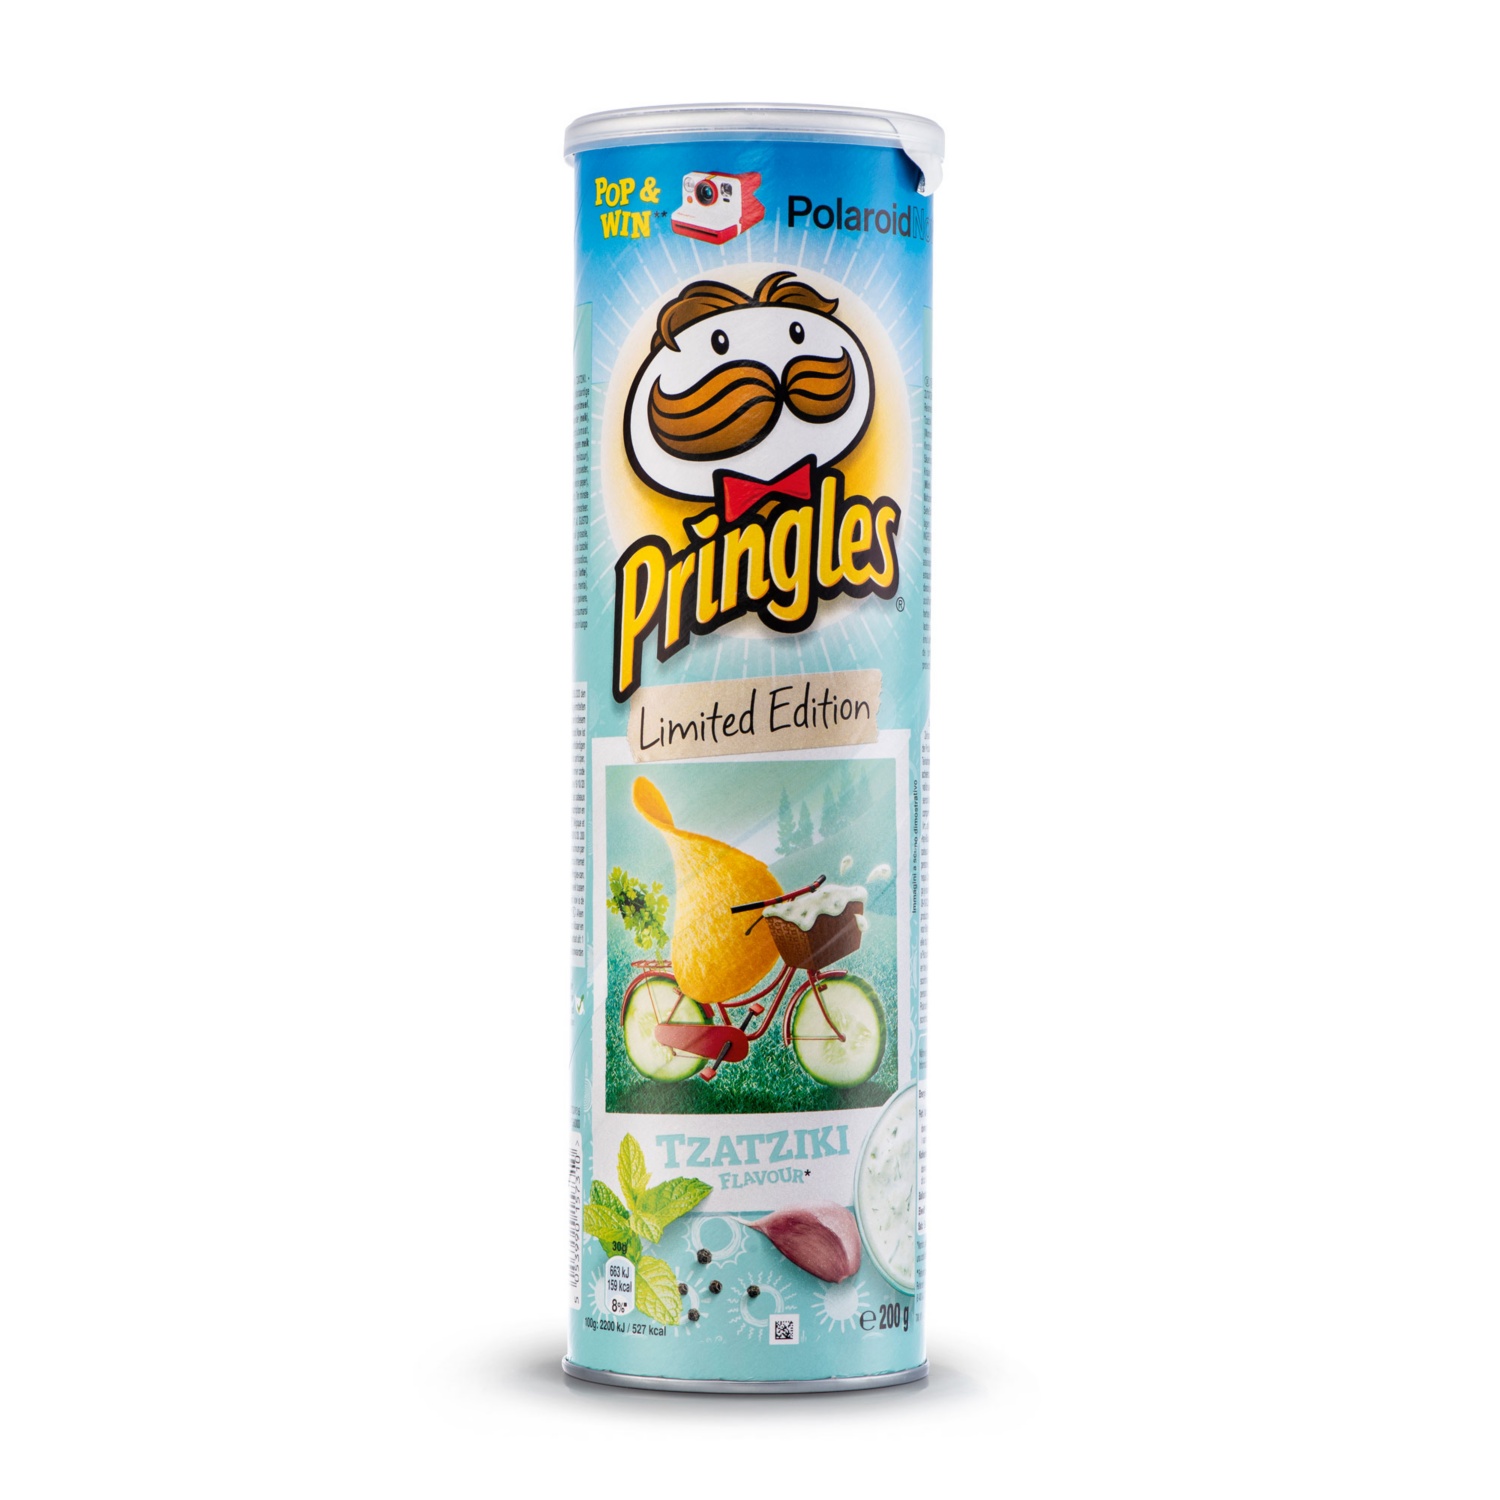 Pringles Limited Summer Edition, Greek Tzatziki